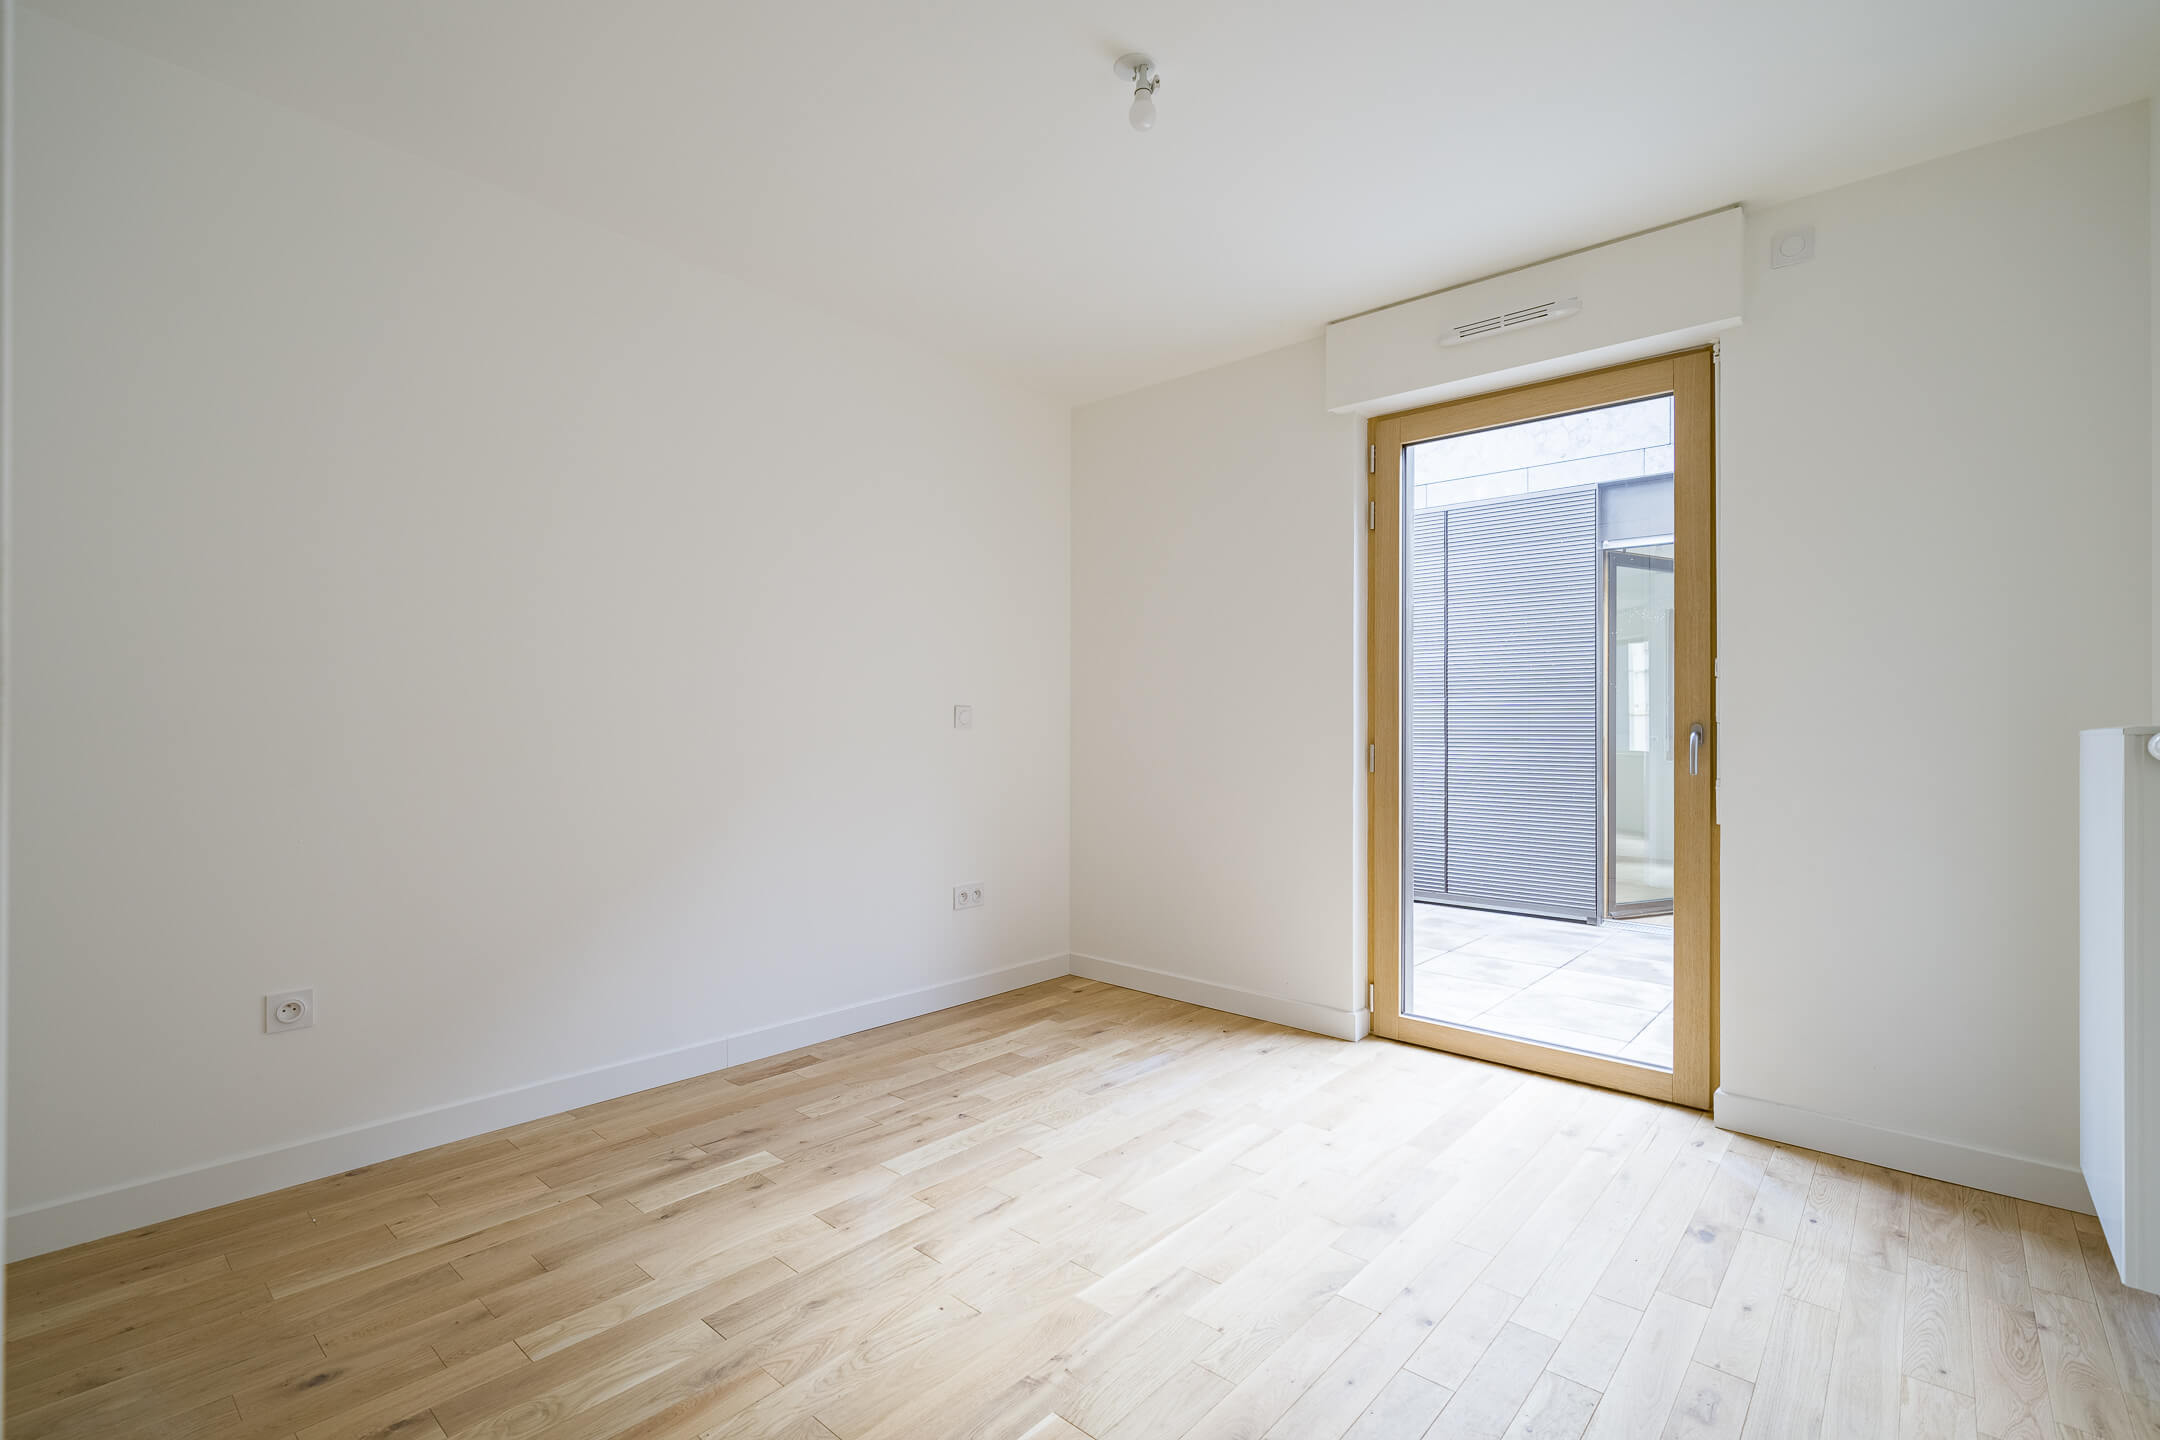 Appartement a louer ville-d'avray - 4 pièce(s) - 85.63 m2 - Surfyn